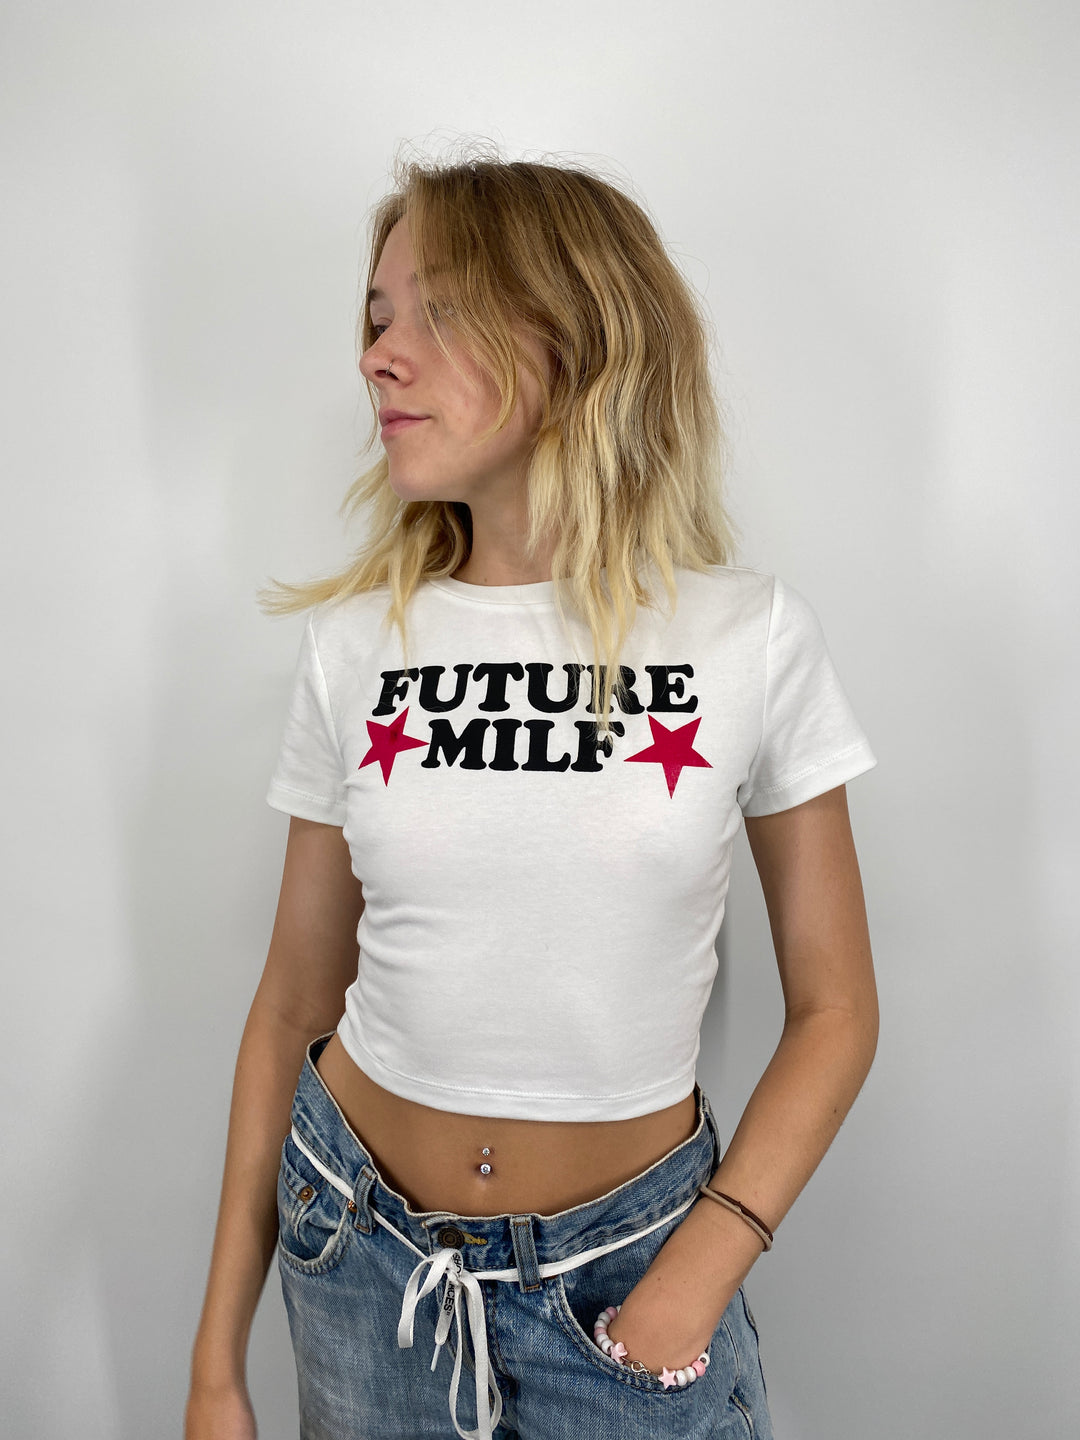 T-Shirt "Future milf"